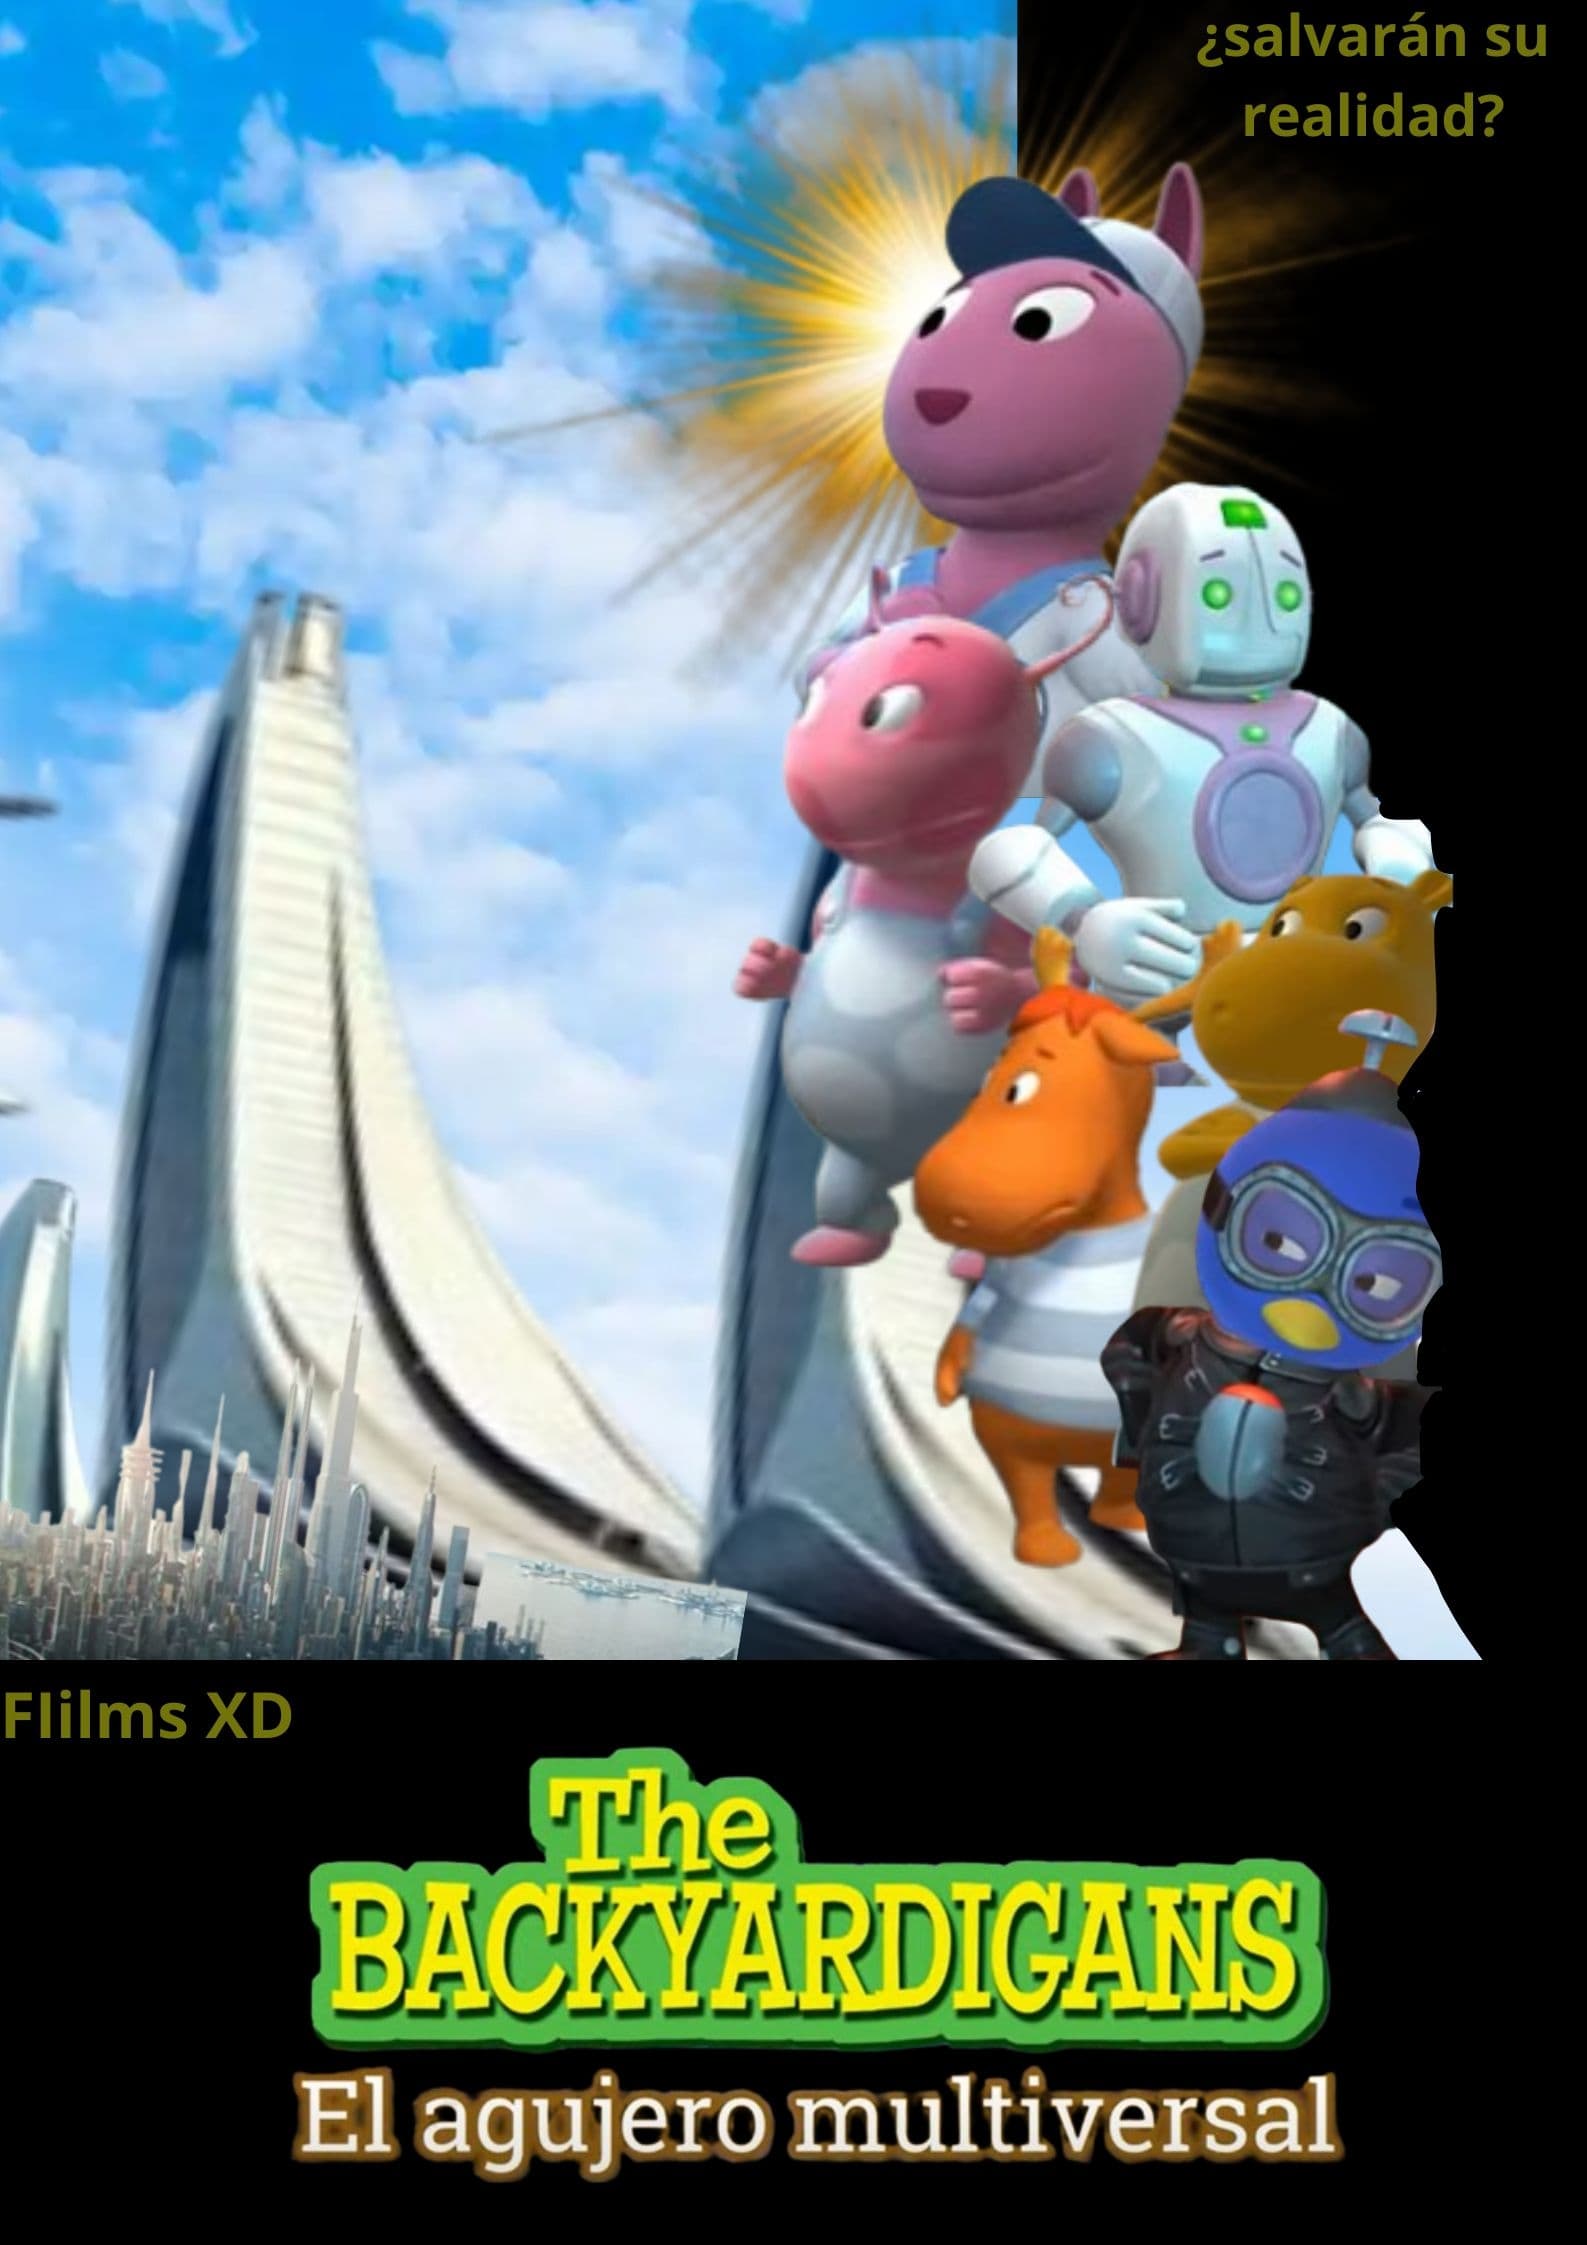 The Backyardigans Movie: El agujero multiversal